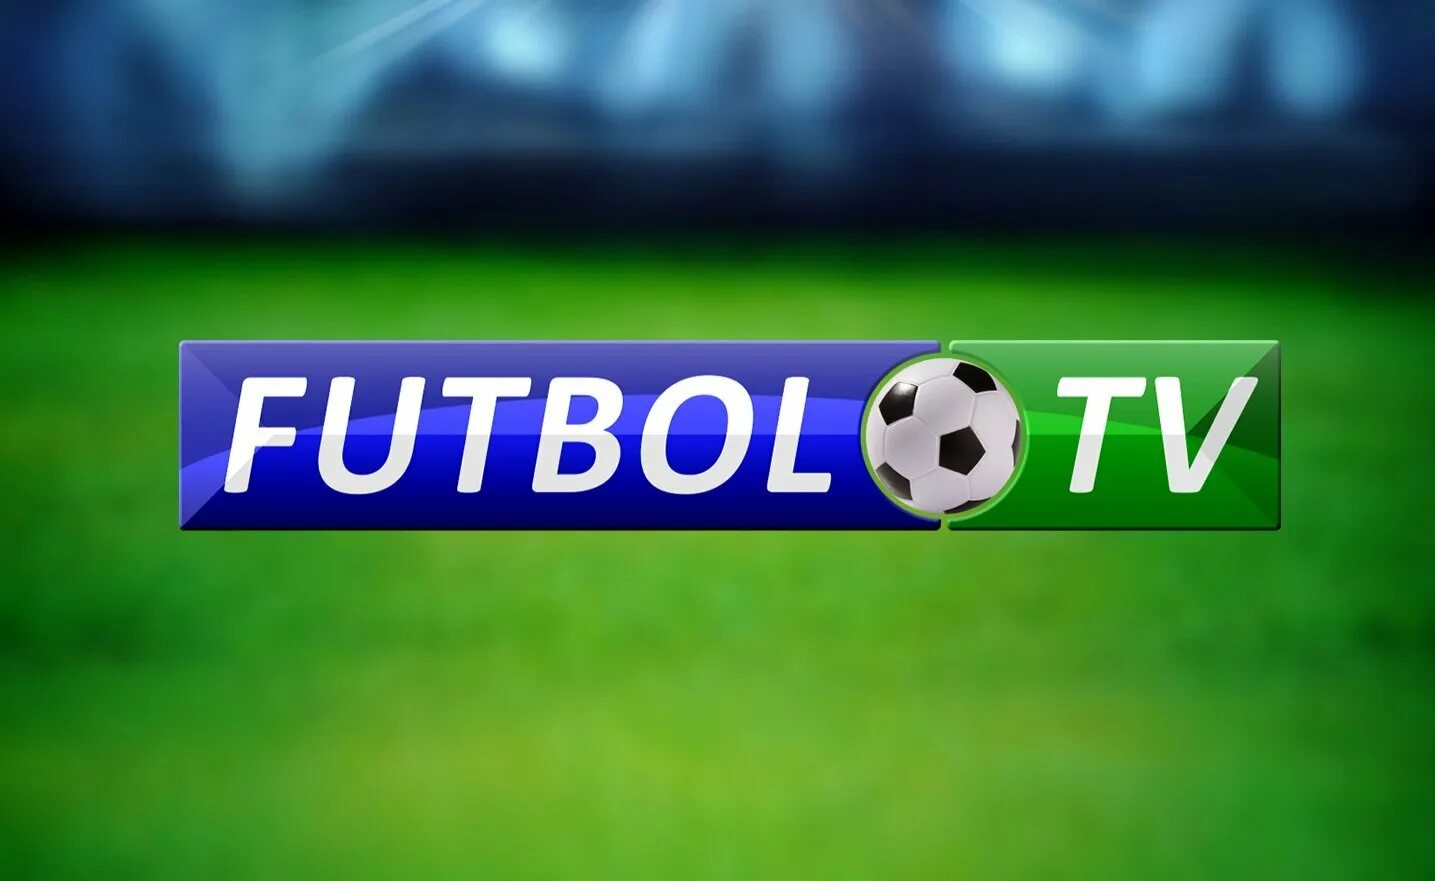 Футбол ТВ. Узбекистан футбол ТВ каналы. Логотип Futbol TV. Футбол канал Узбекистан. Футбол 24 тв